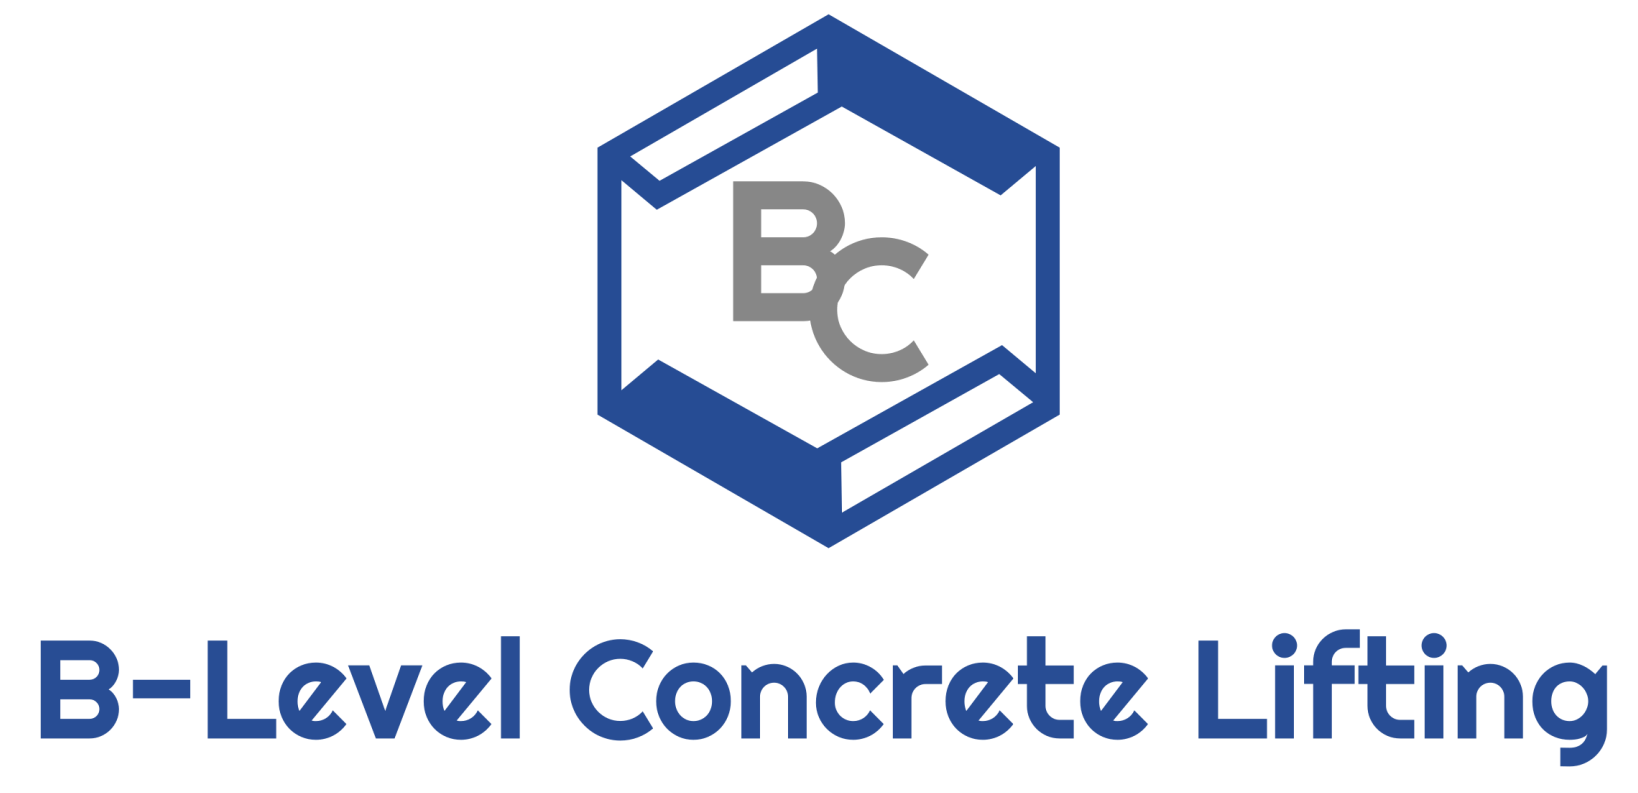 b-level concrete lifting logo